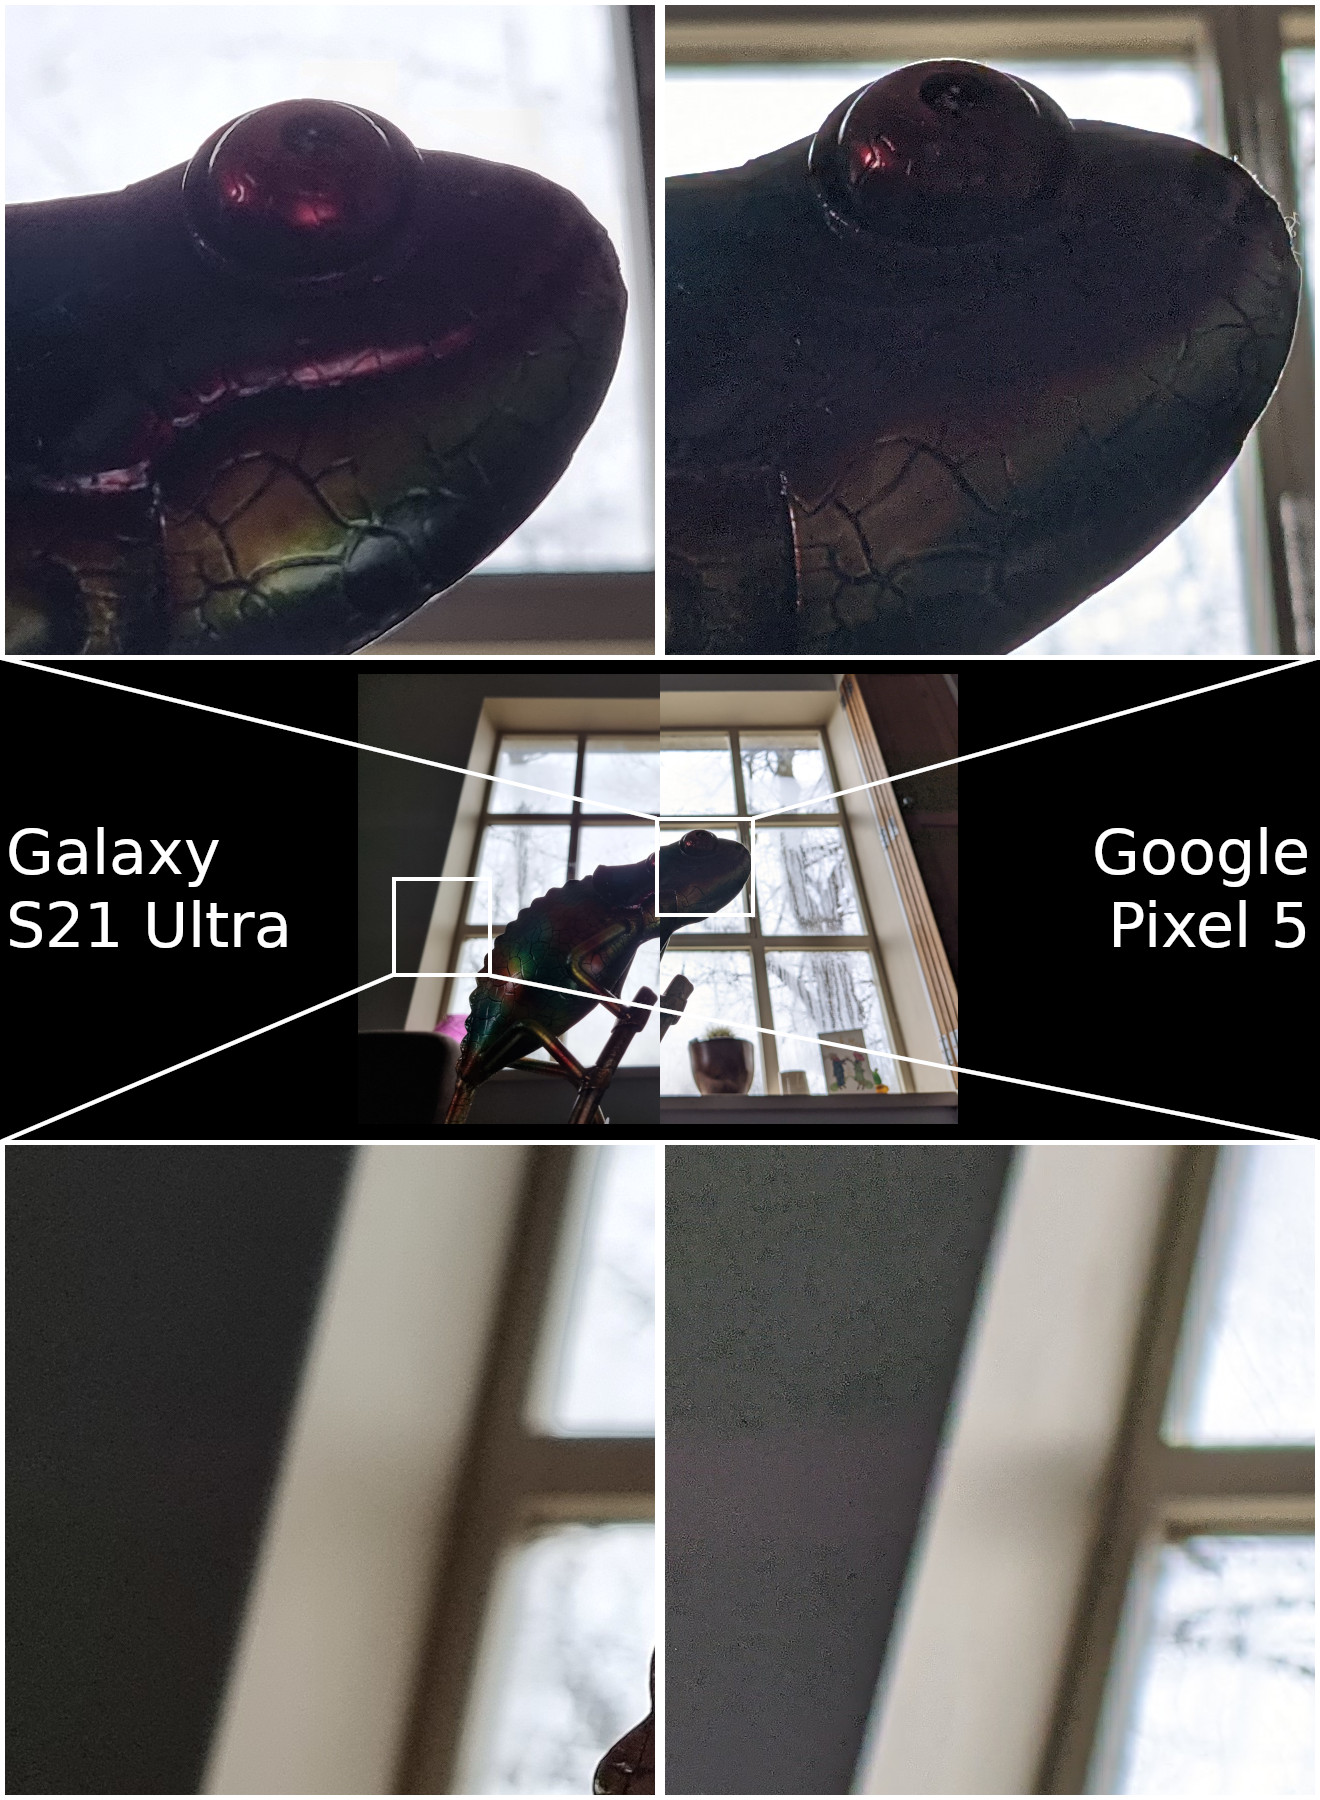 HDR Samsung Galaxy S21 Ultra vs Google Pixel 5